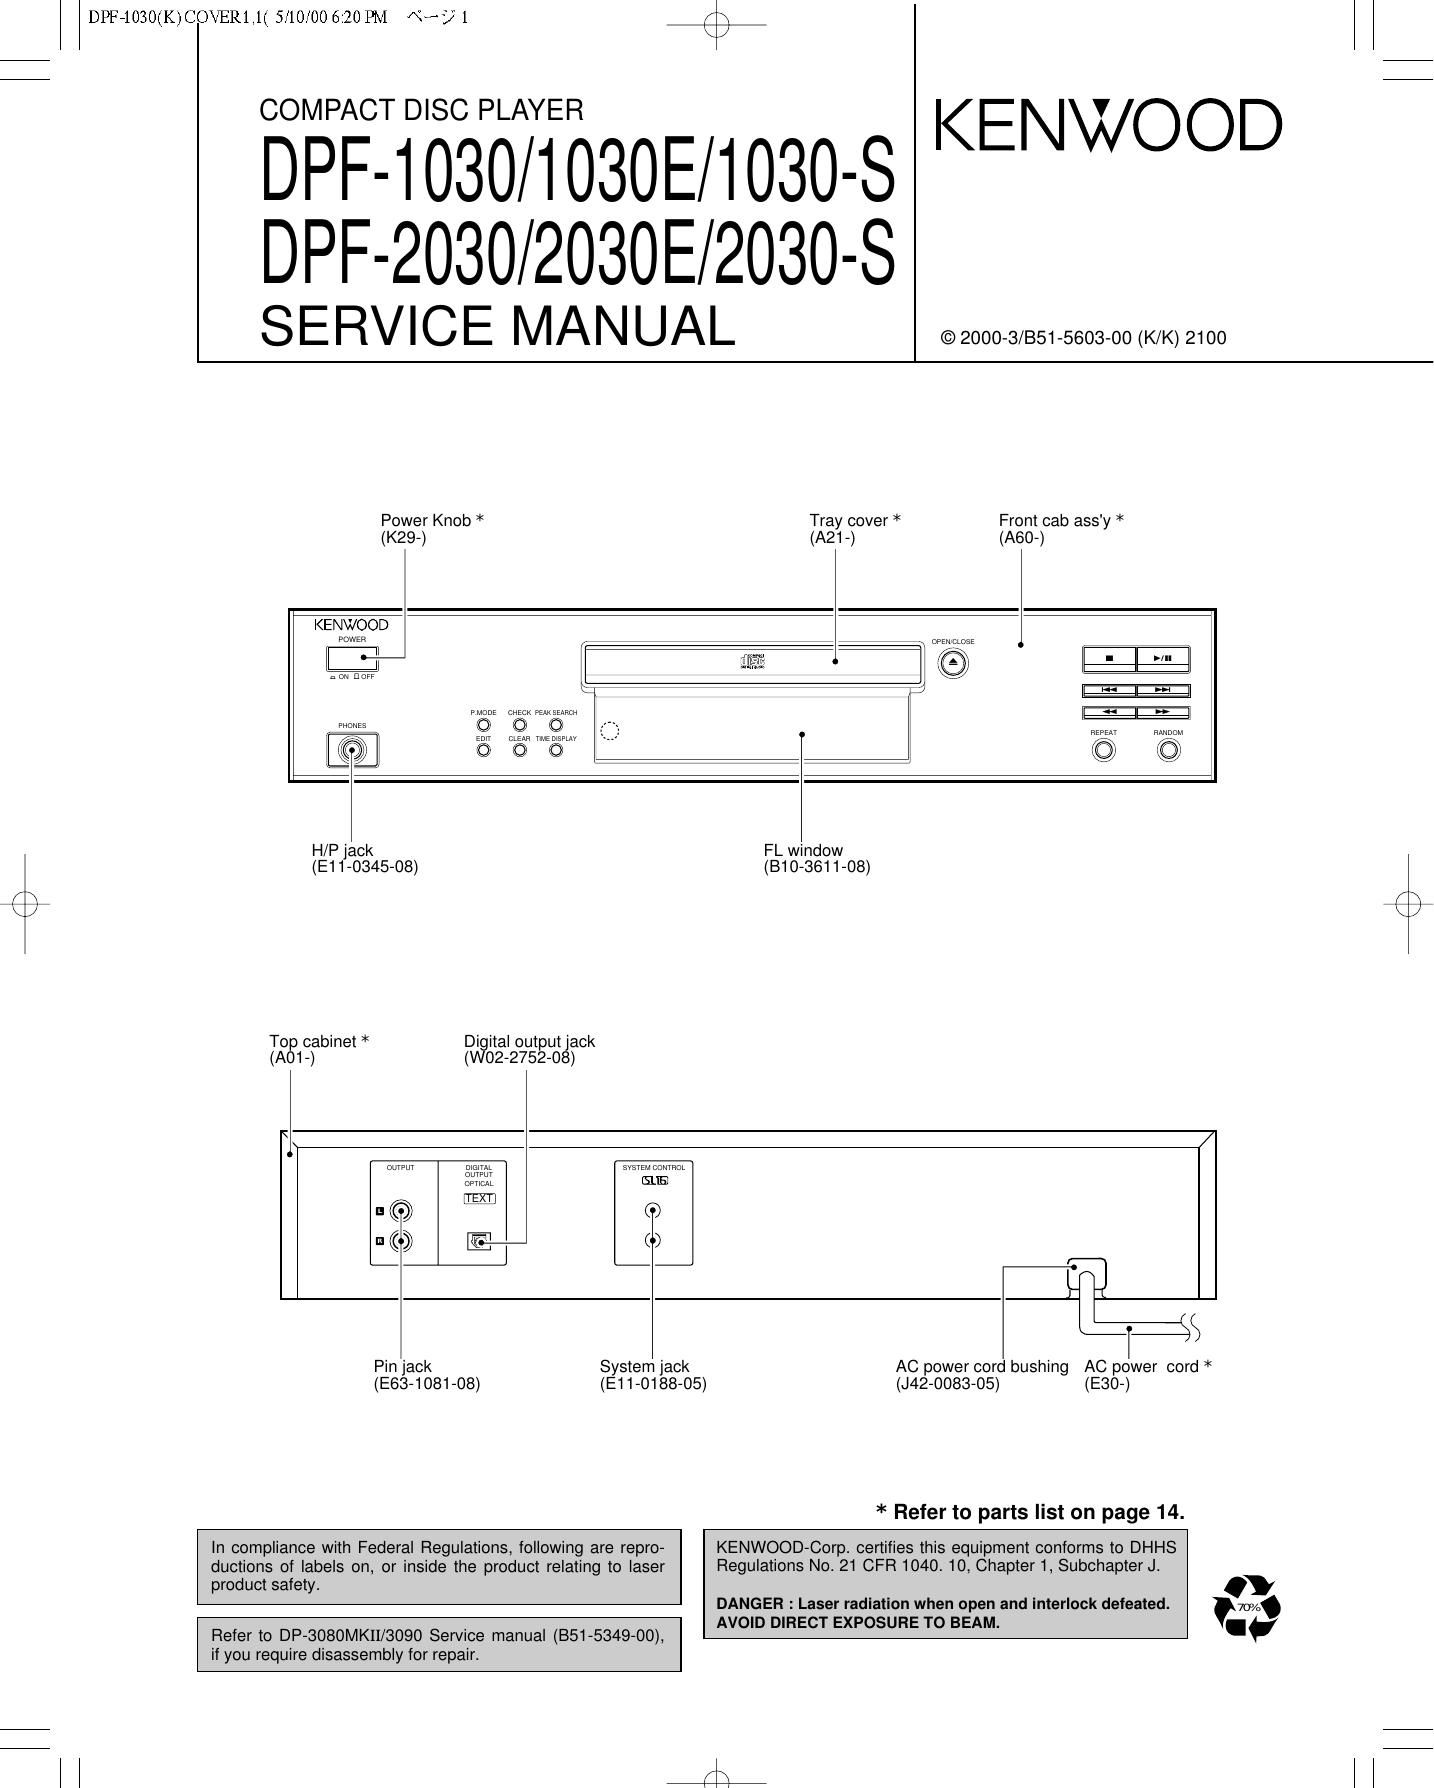 Kenwood DPF 2030 E Service Manual